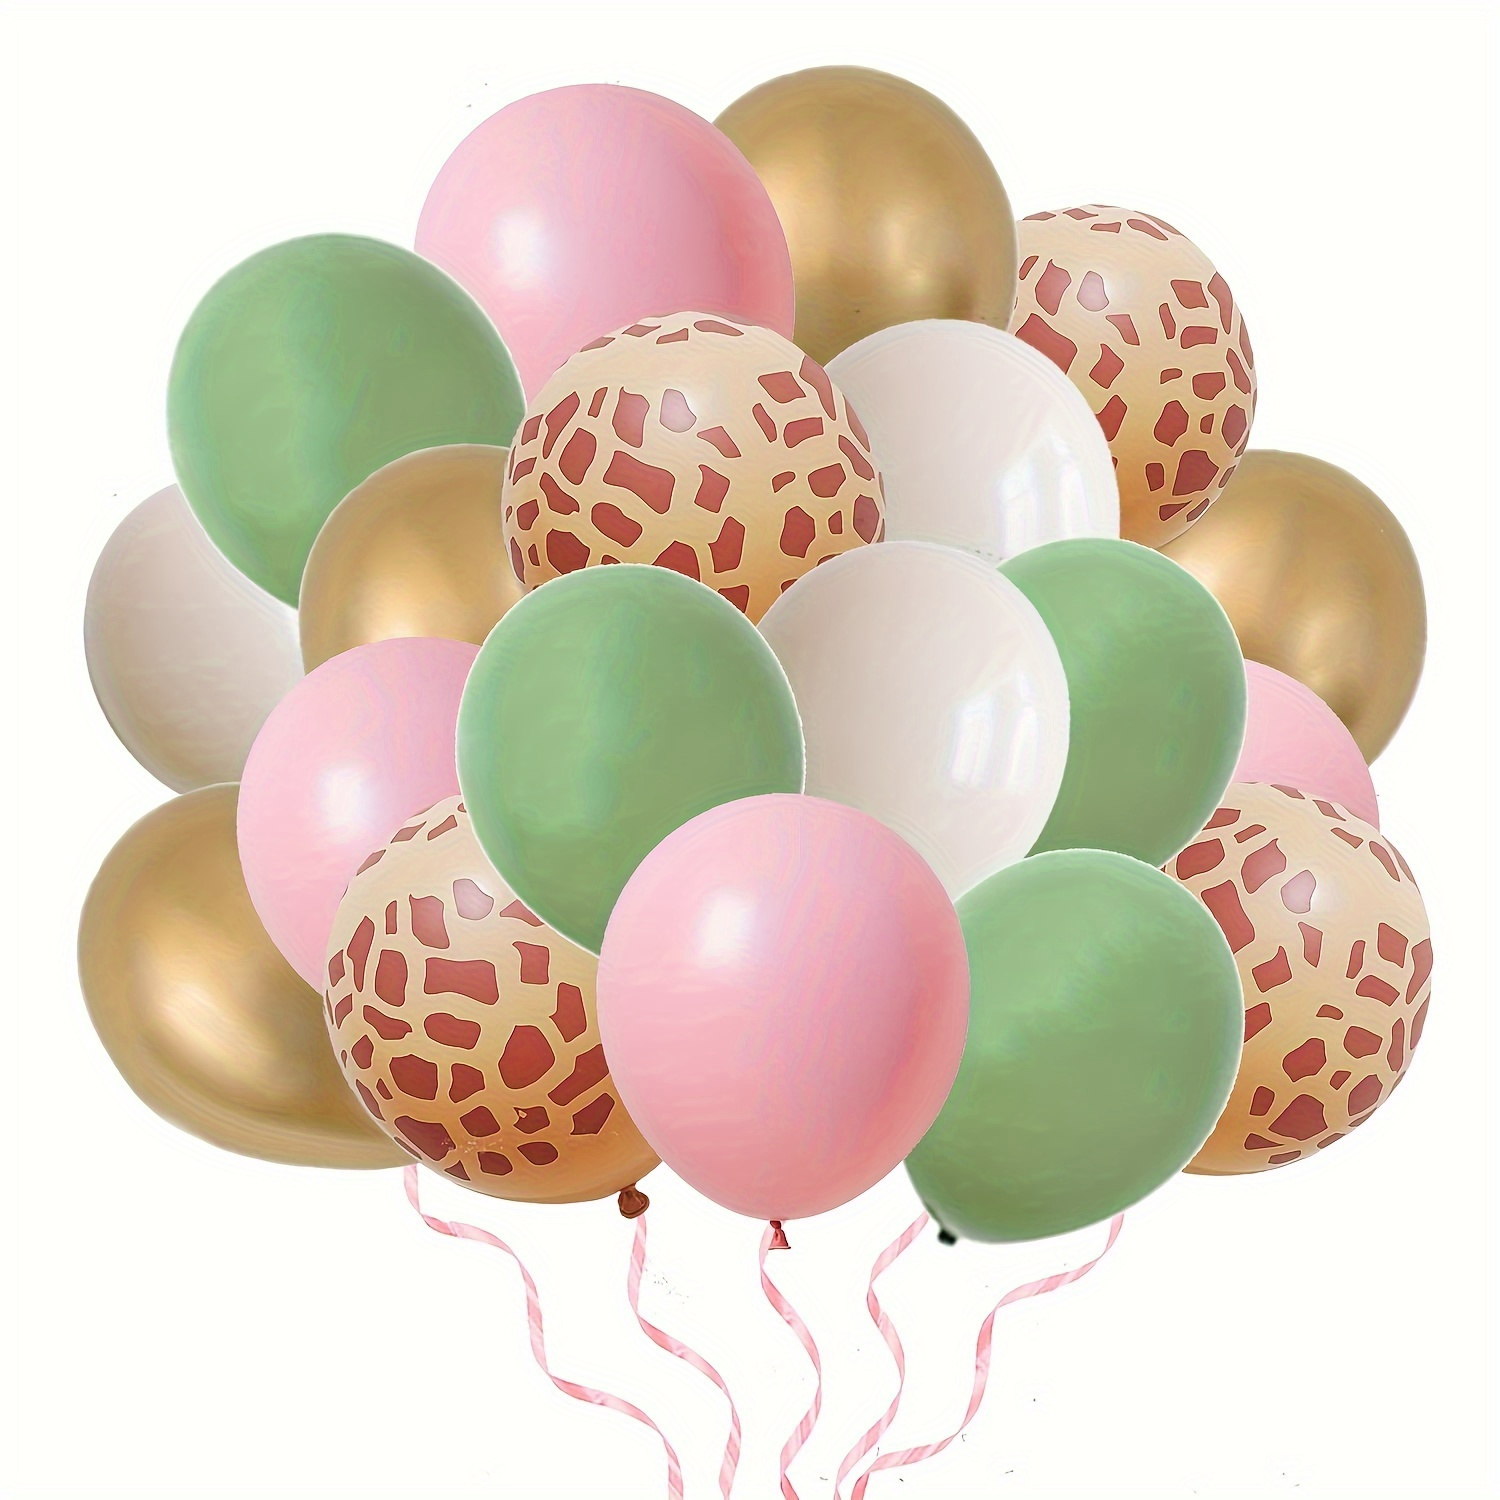 

50-piece Jungle Safari Balloon Set - Perfect For Birthdays, Baby Showers & More - Giraffe & Animal Prints, Latex Party Decorations